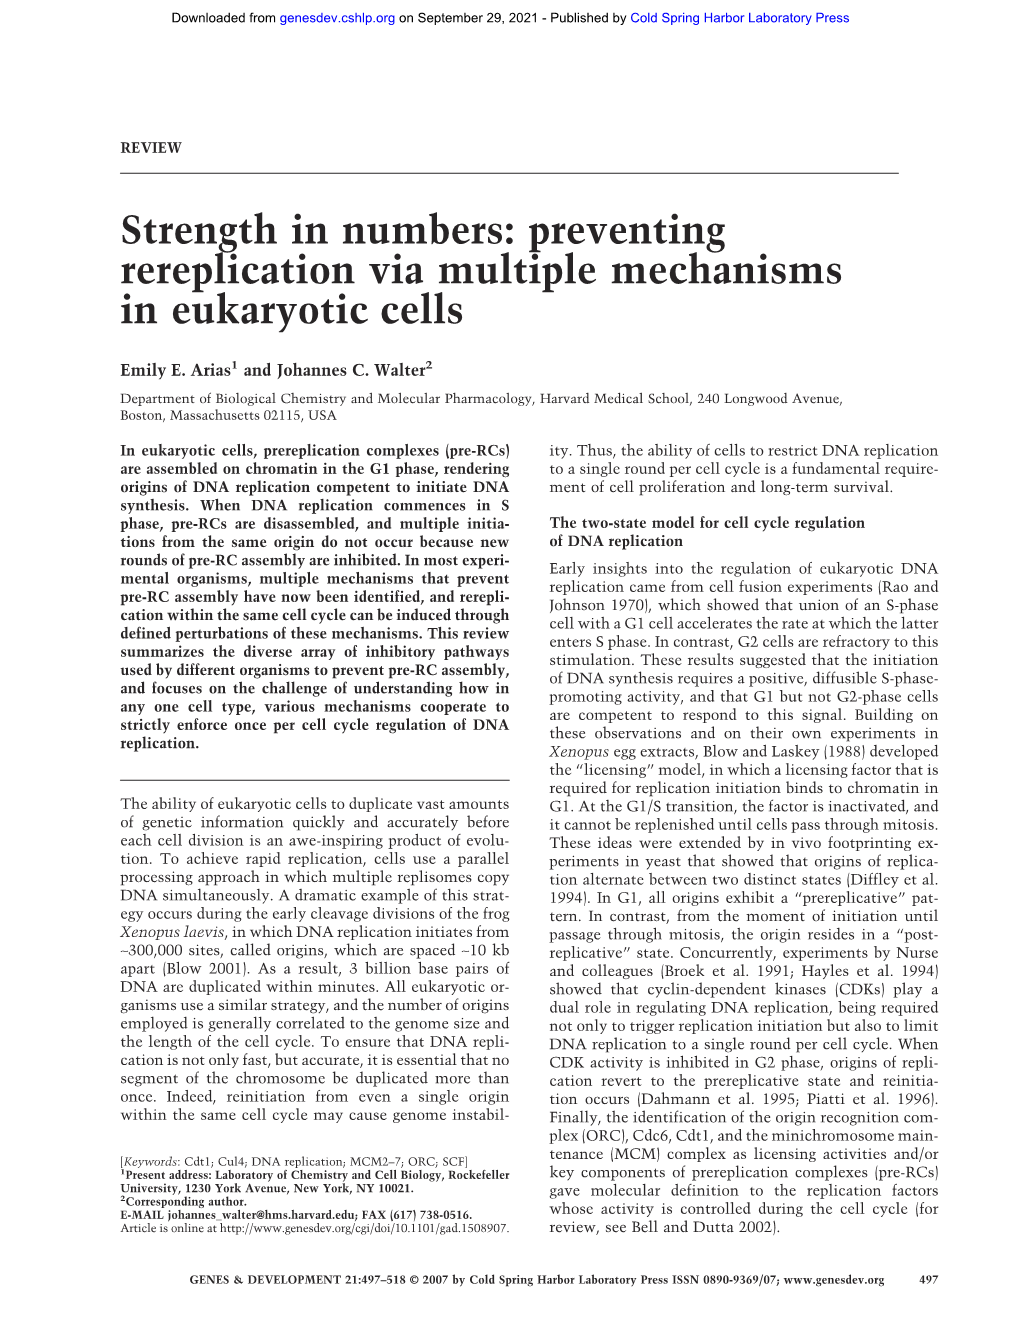 Preventing Rereplication Via Multiple Mechanisms in Eukaryotic Cells